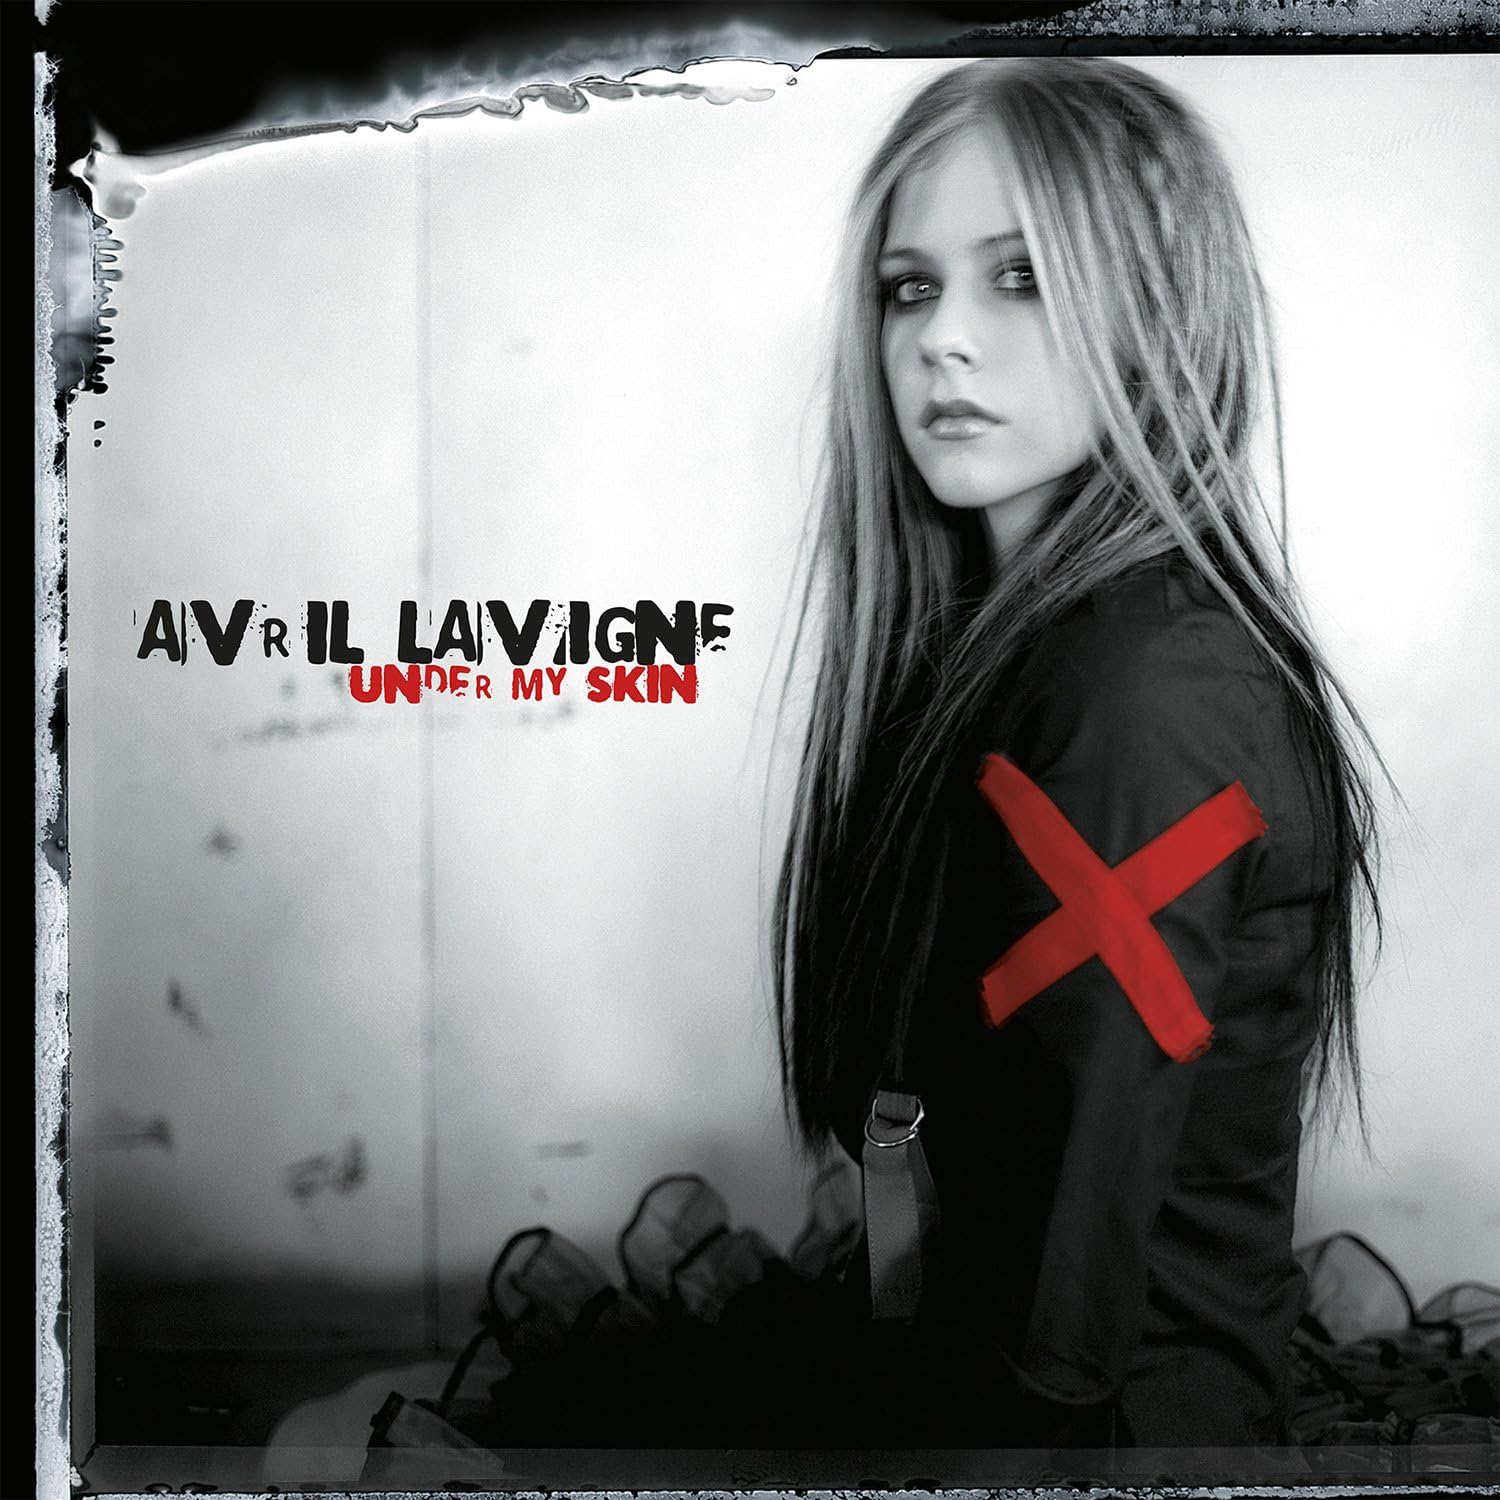 Avril Lavigne "Under My Skin" Vinyl